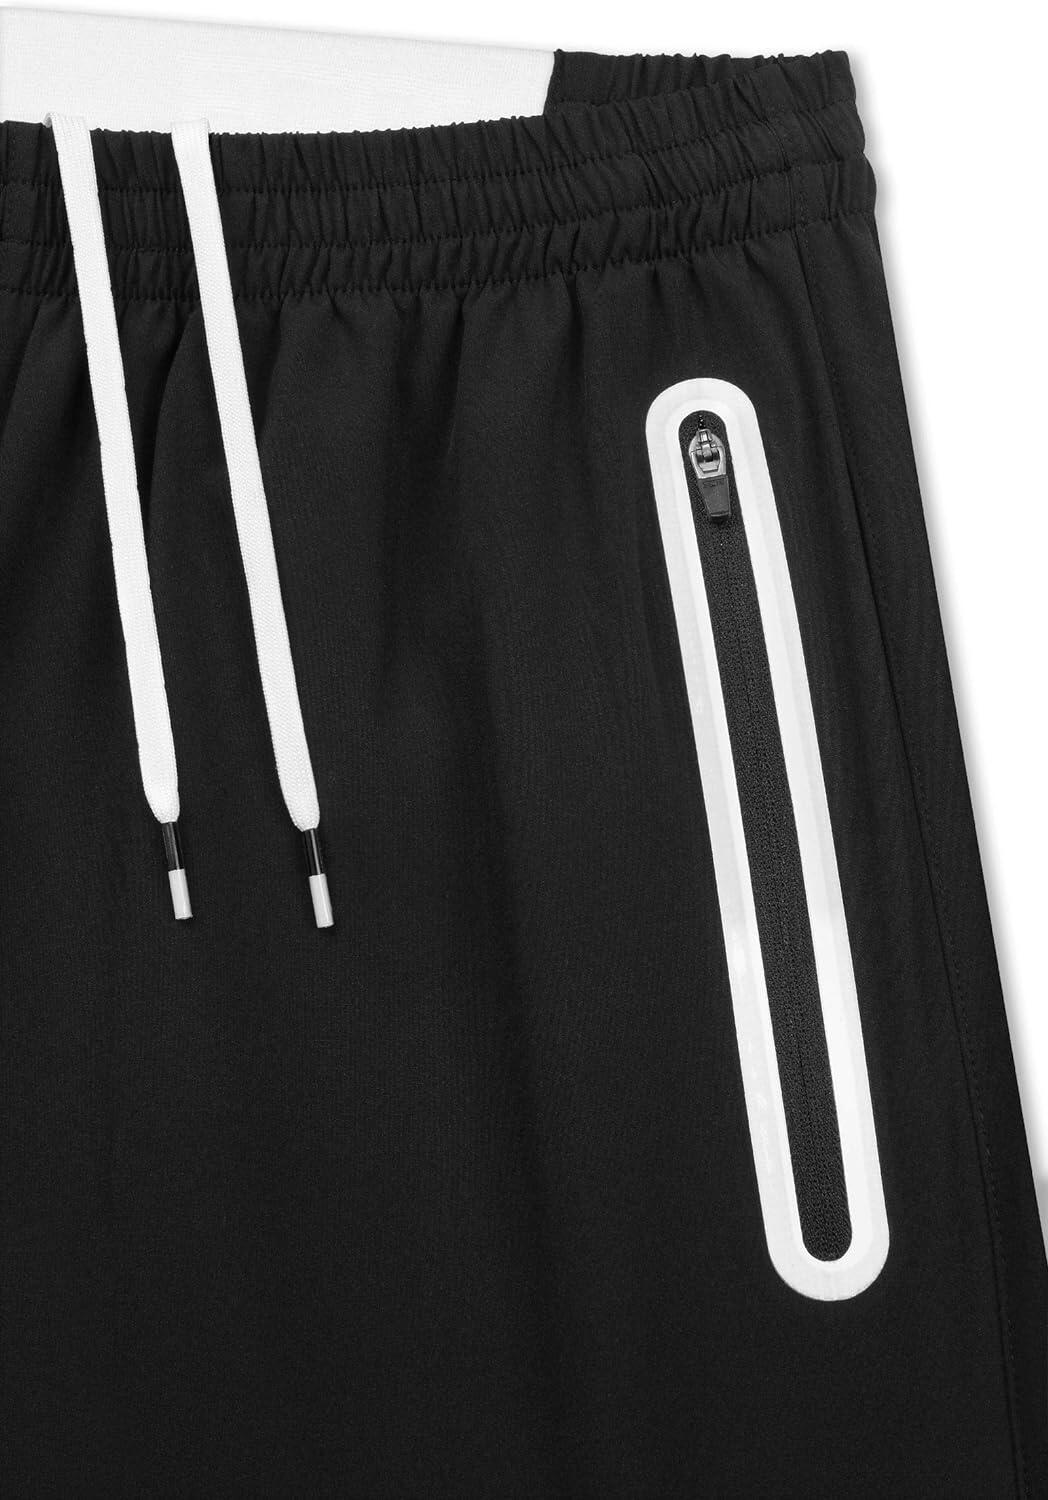 Men's Elite Tech Lightweight Running Shorts with Zip Pockets - Black/White 3/6